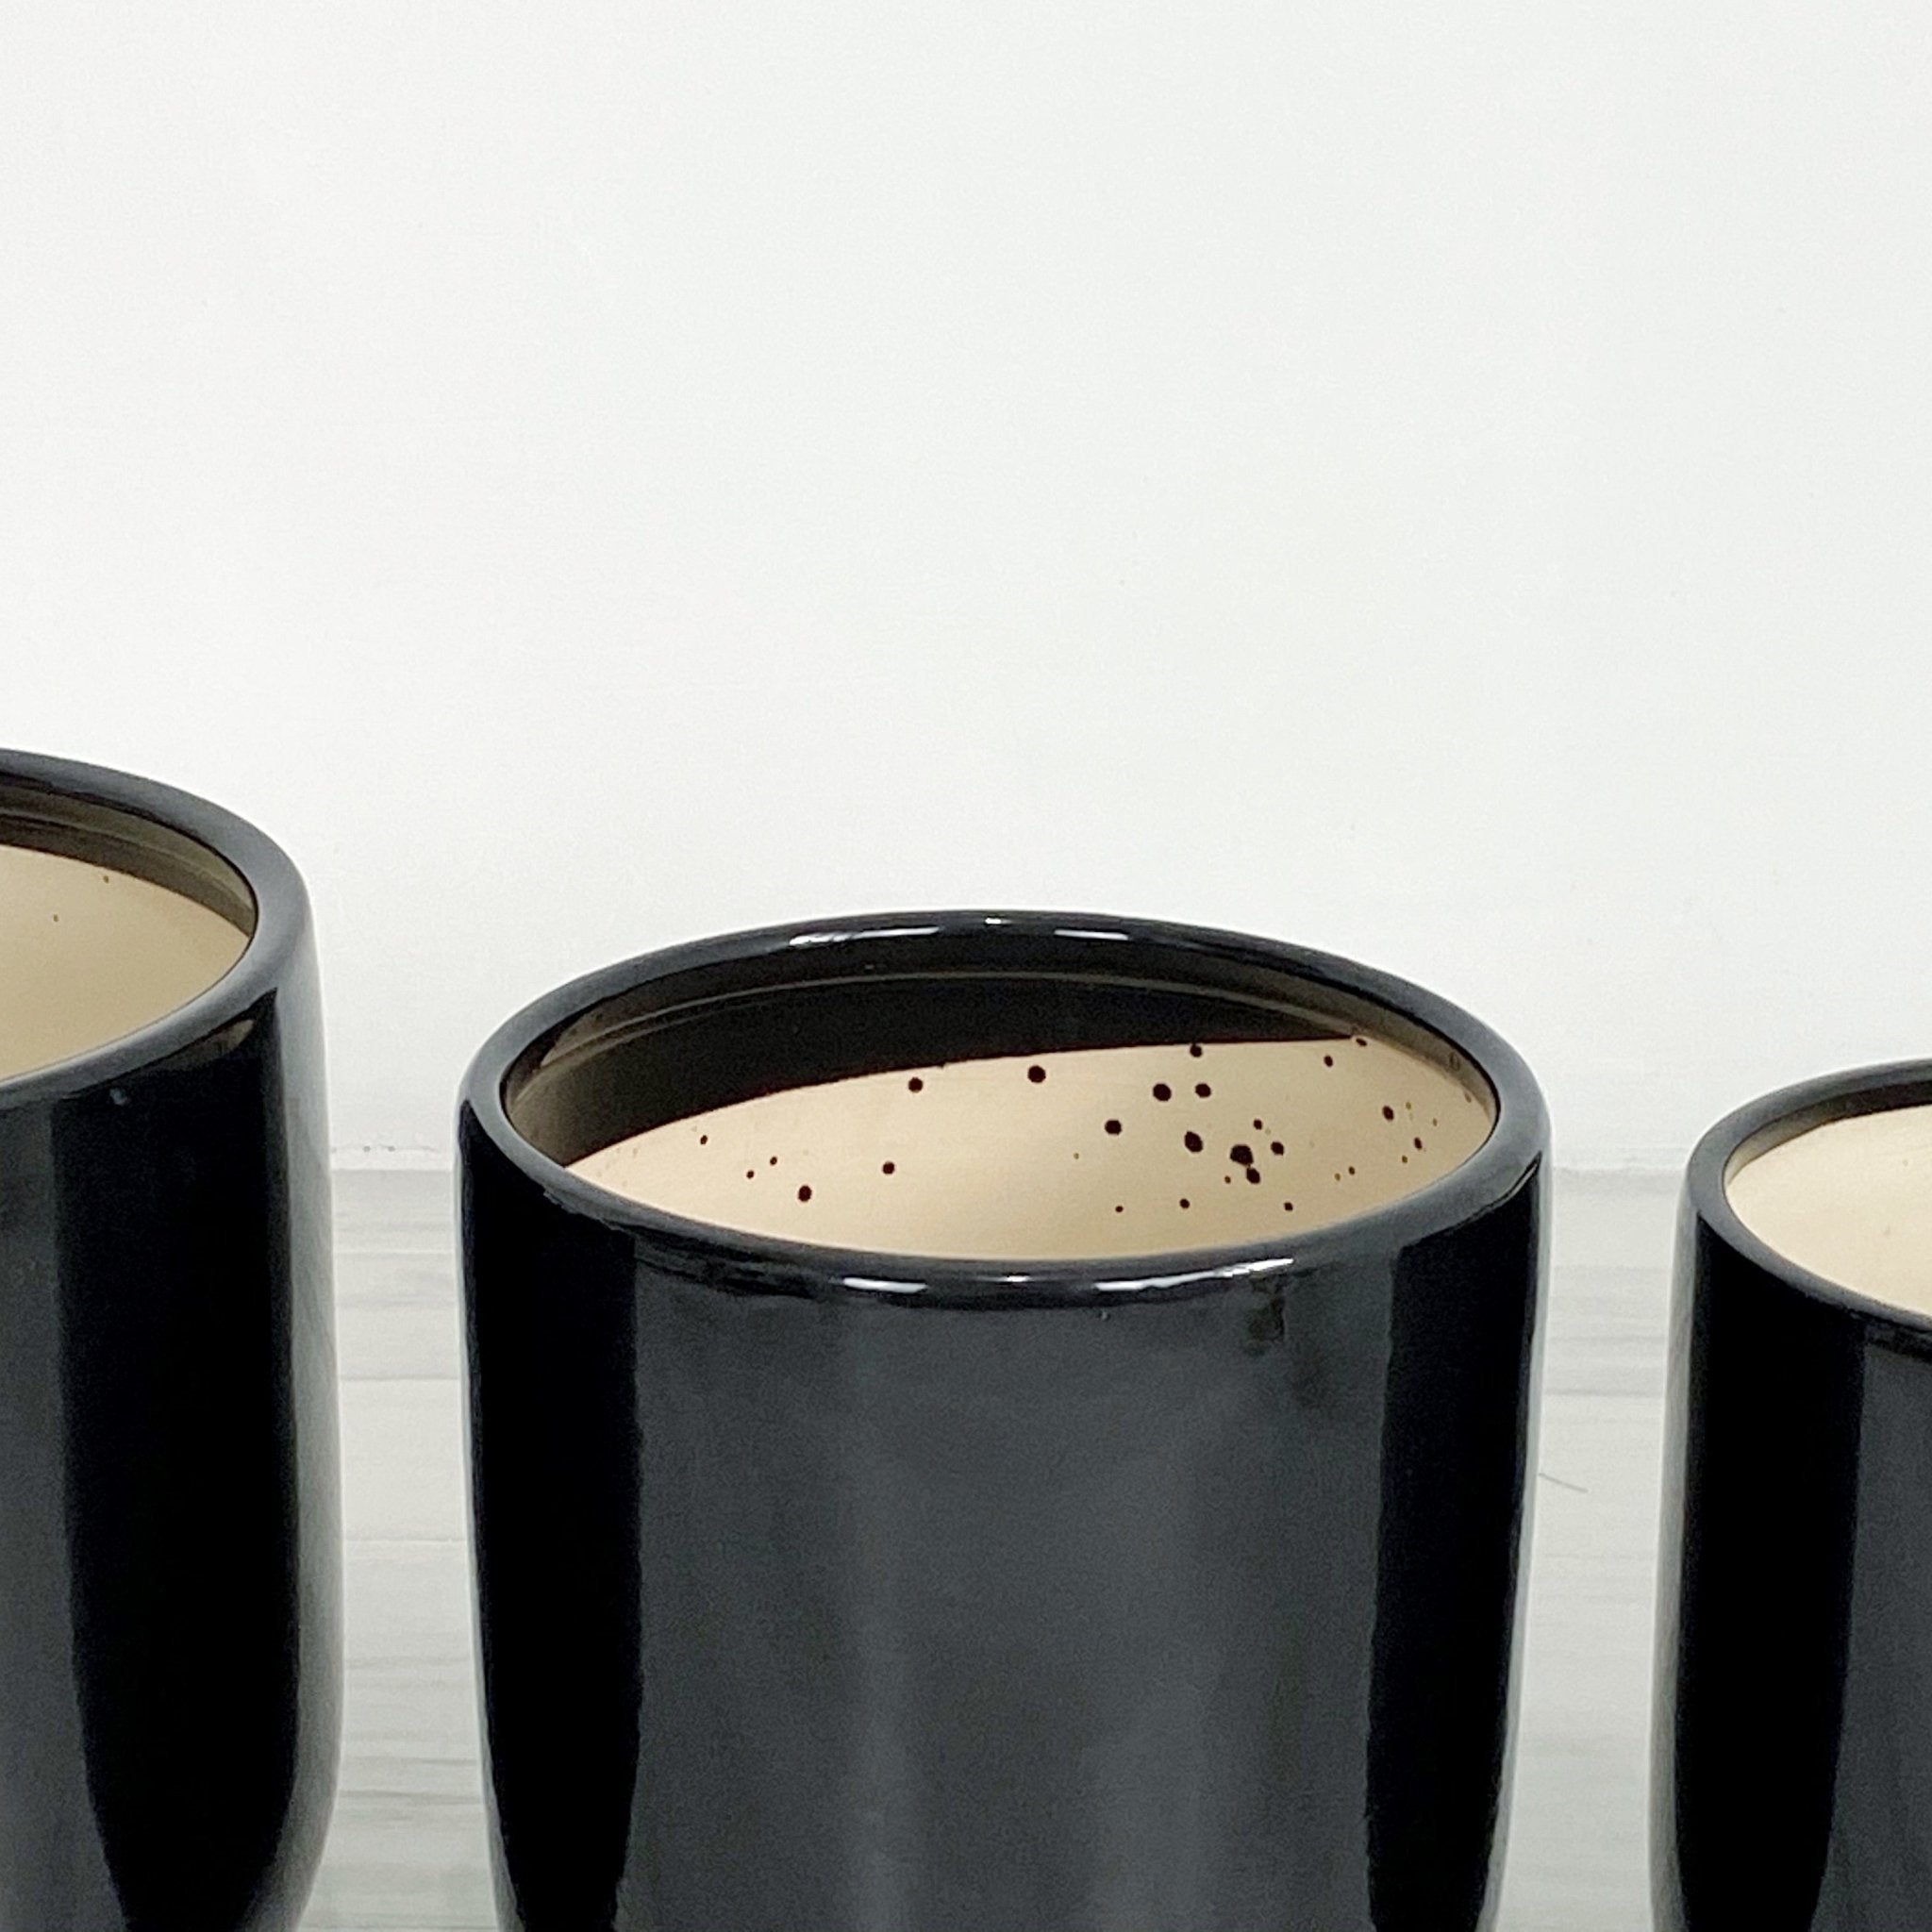 Glazed Clay Earthenware Ceramic Pots (Set of Three) - Pots For Plants